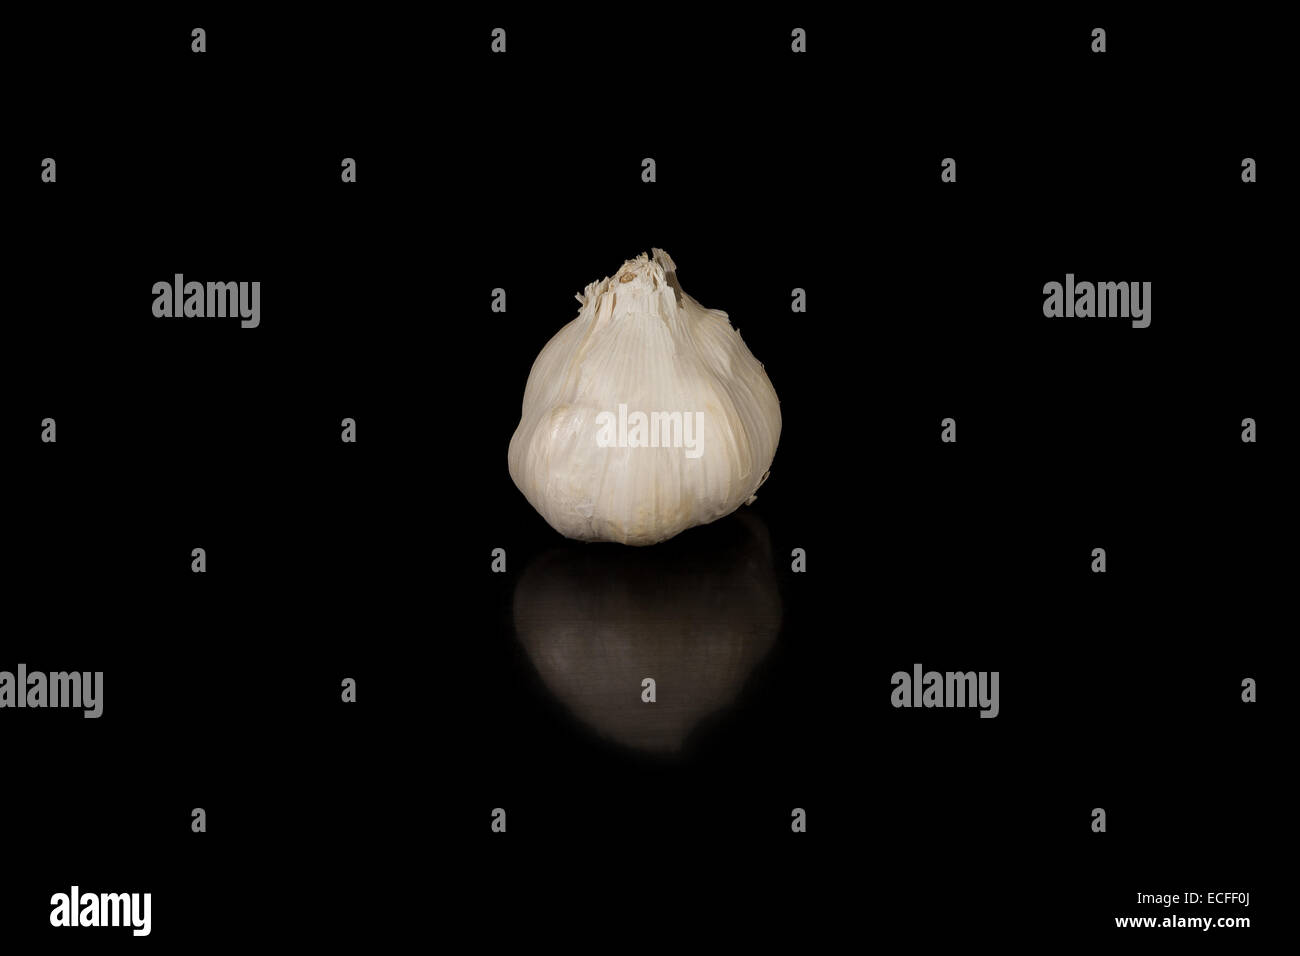 Closeup to a garlic bulb on a black background Stock Photo